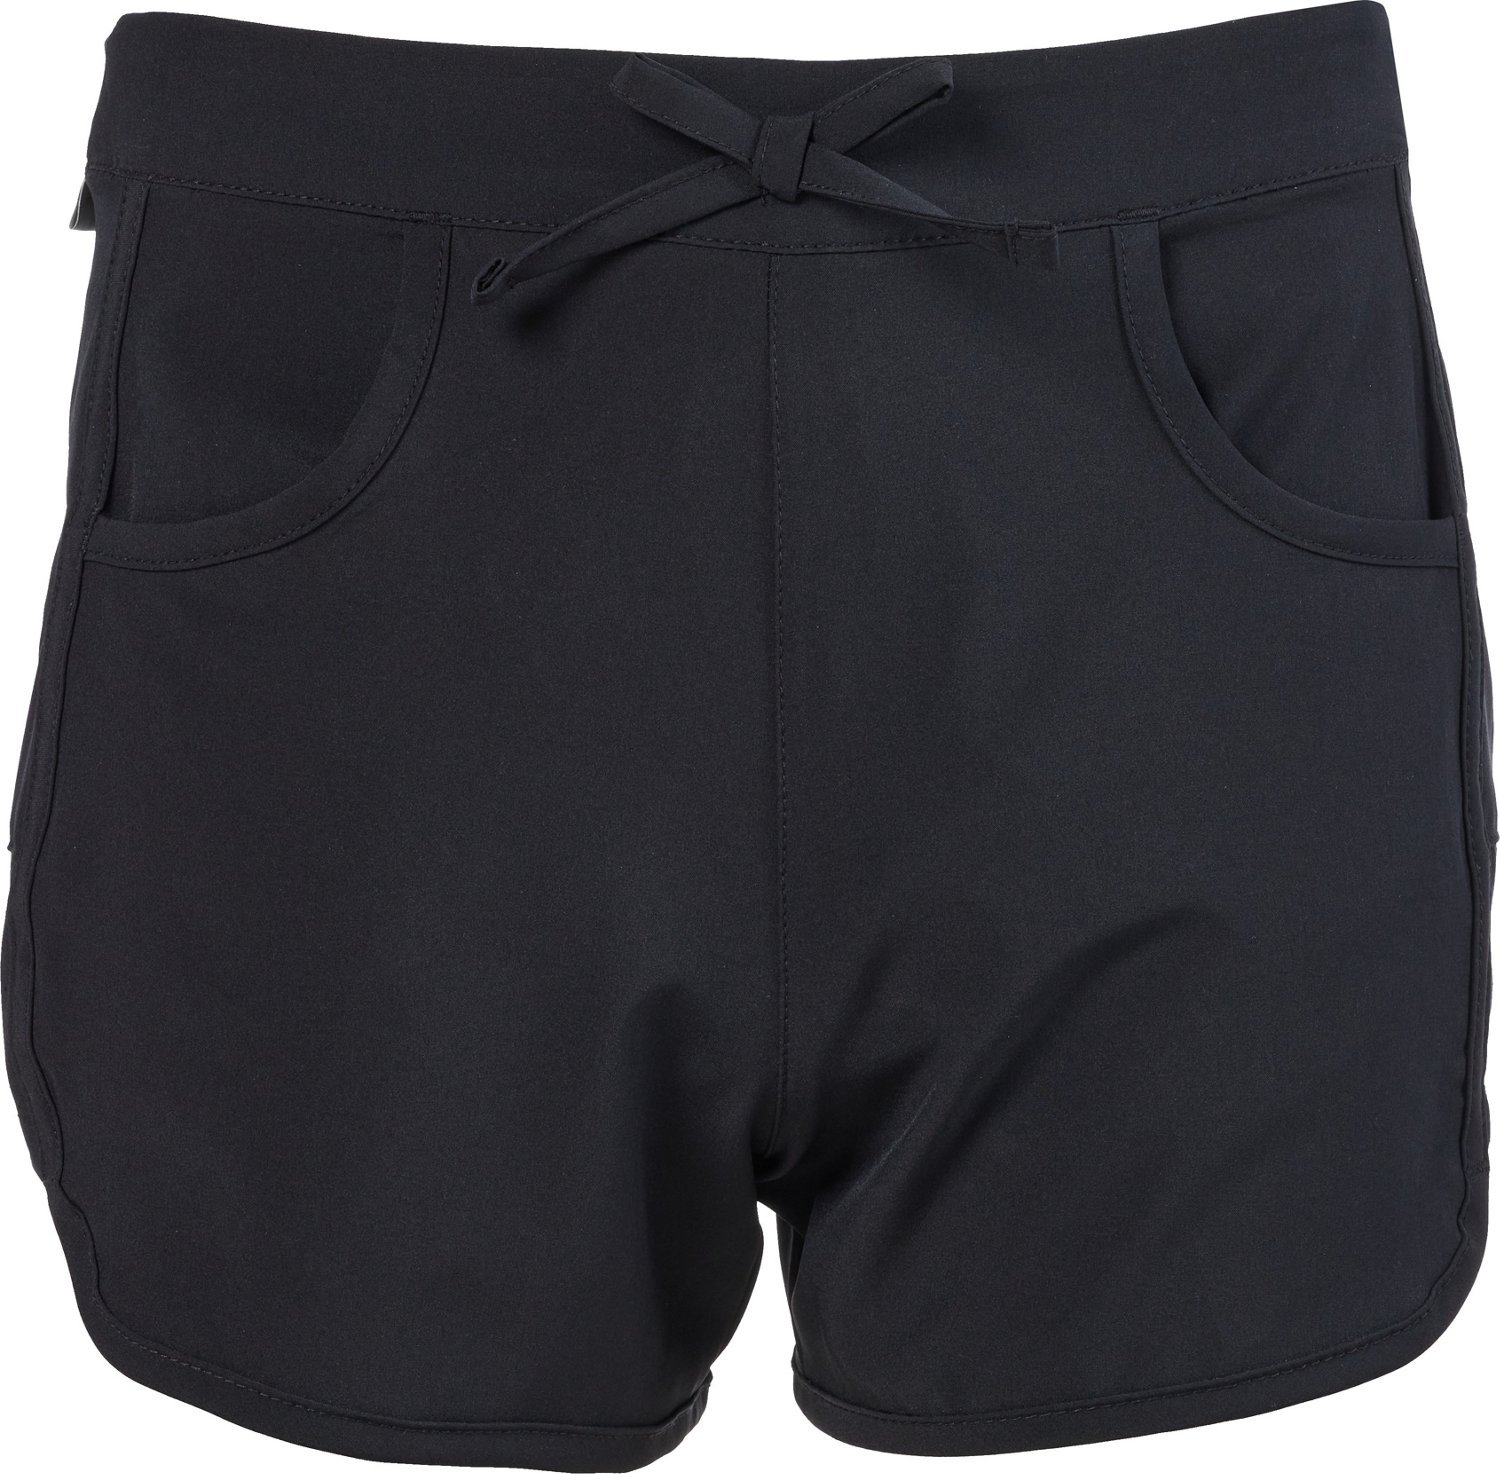 Regular Size XL Magellan Shorts for Men for sale